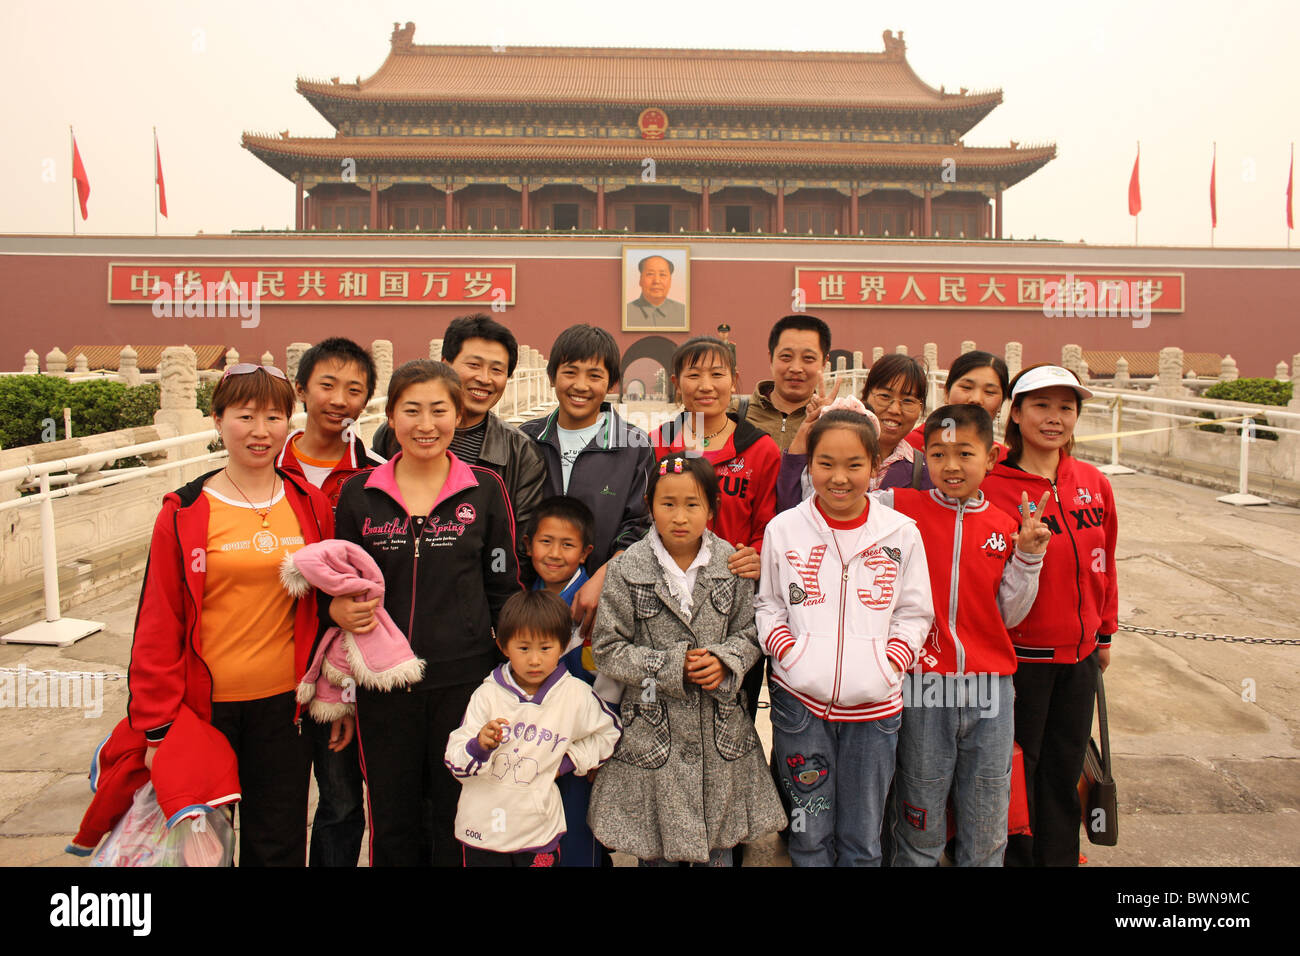 China Asia Peking Beijing Beijing Tian'anmen April 2008 Tiananmen Gate party group Chinese tourists portra Stock Photo